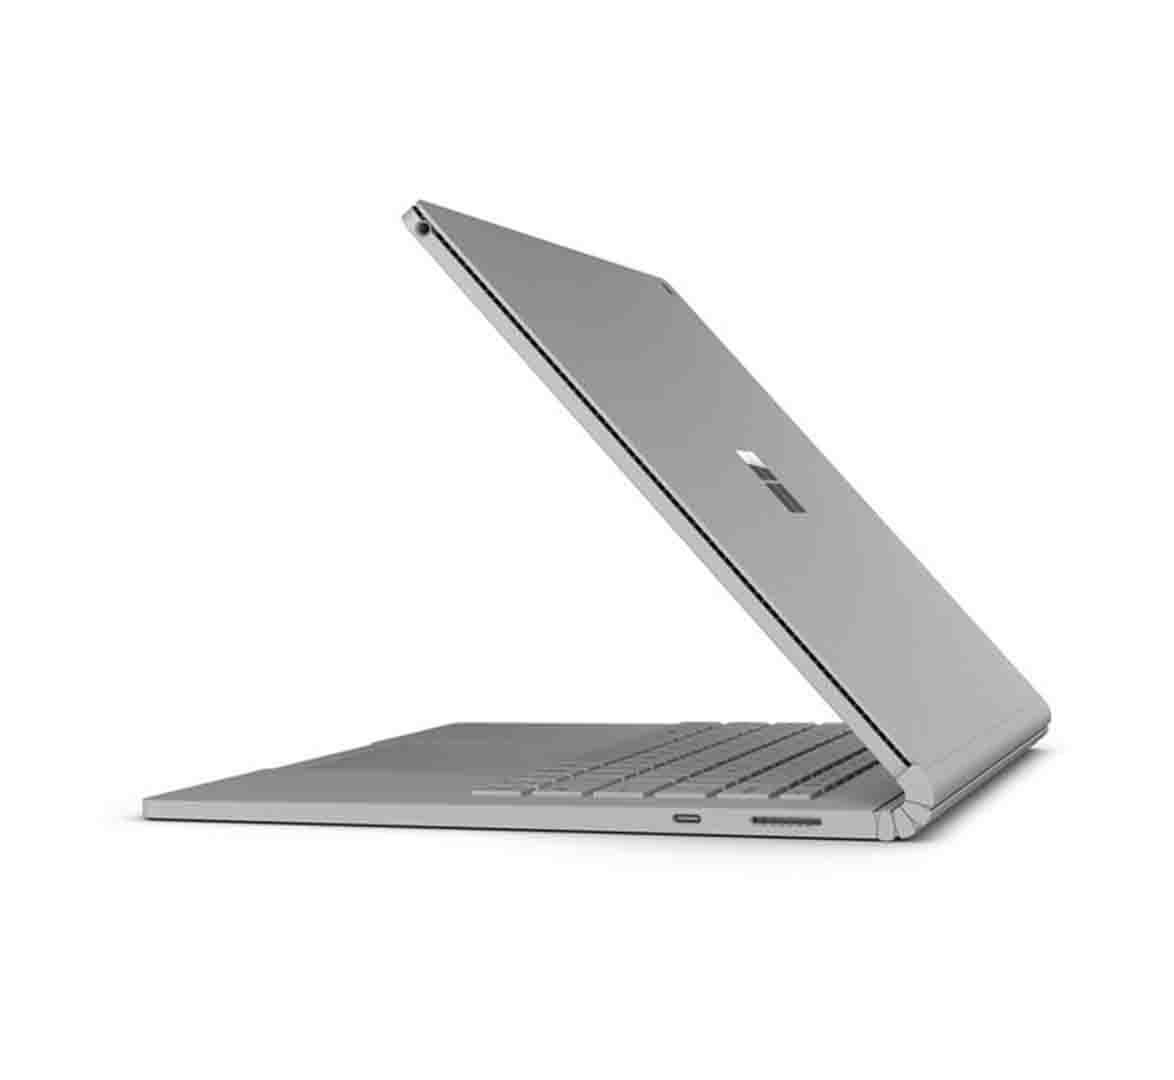 Microsoft Surface Book 2 Business Laptop, Intel Core i5-7th Gen CPU, 8GB RAM, 256GB SSD, 13.5 inch Touchscreen, Windows 10 Pro, Refurbished Laptop